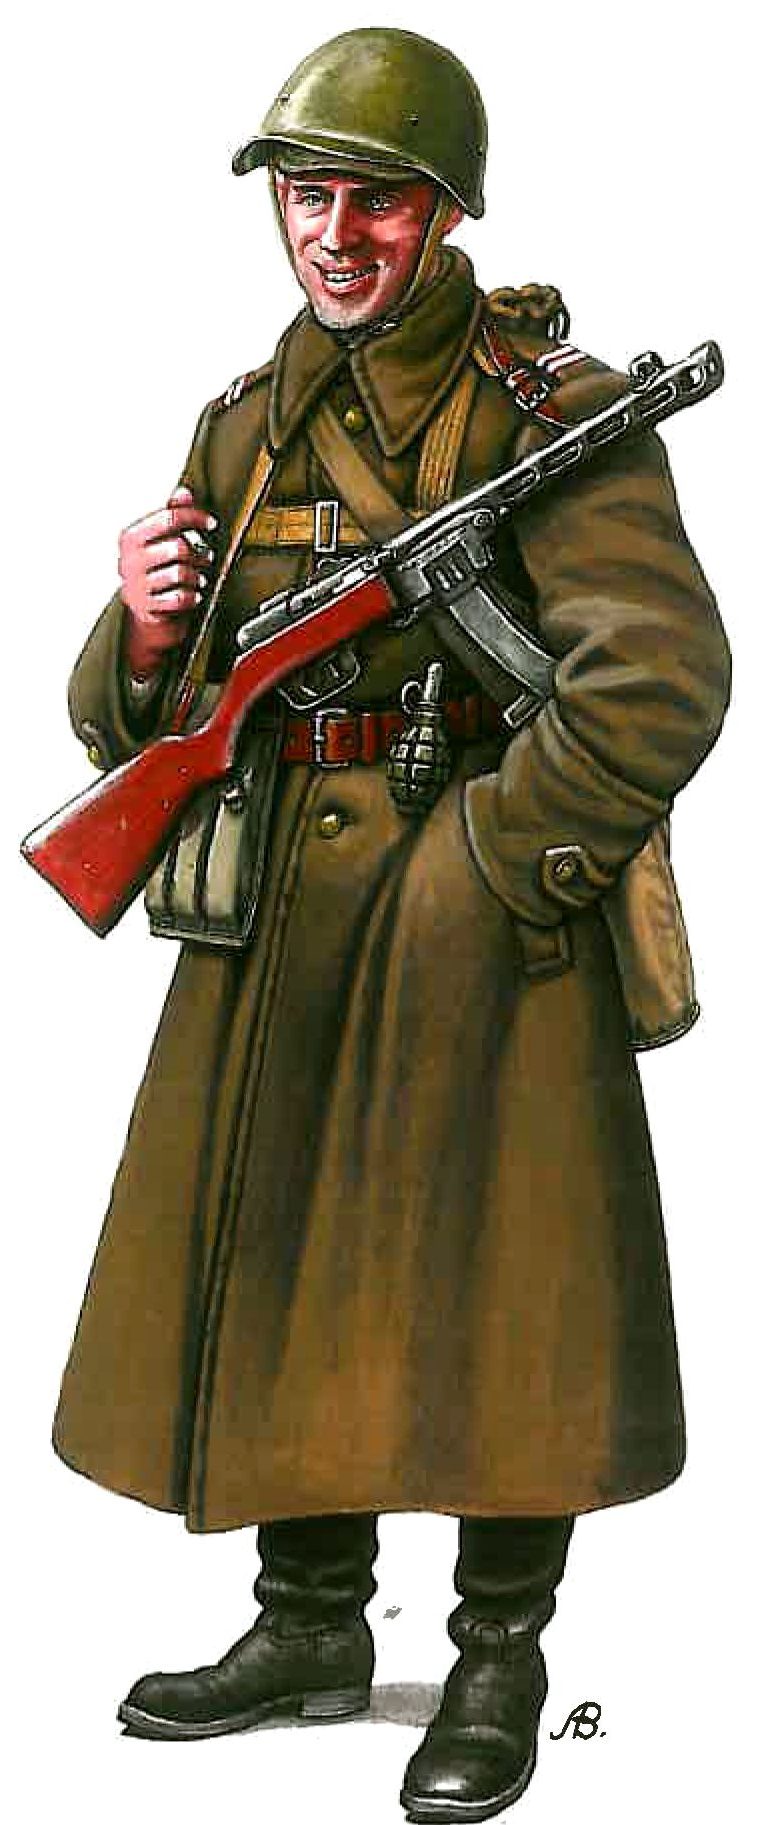 Bulczynki Arnold. Польские пехотинцы.